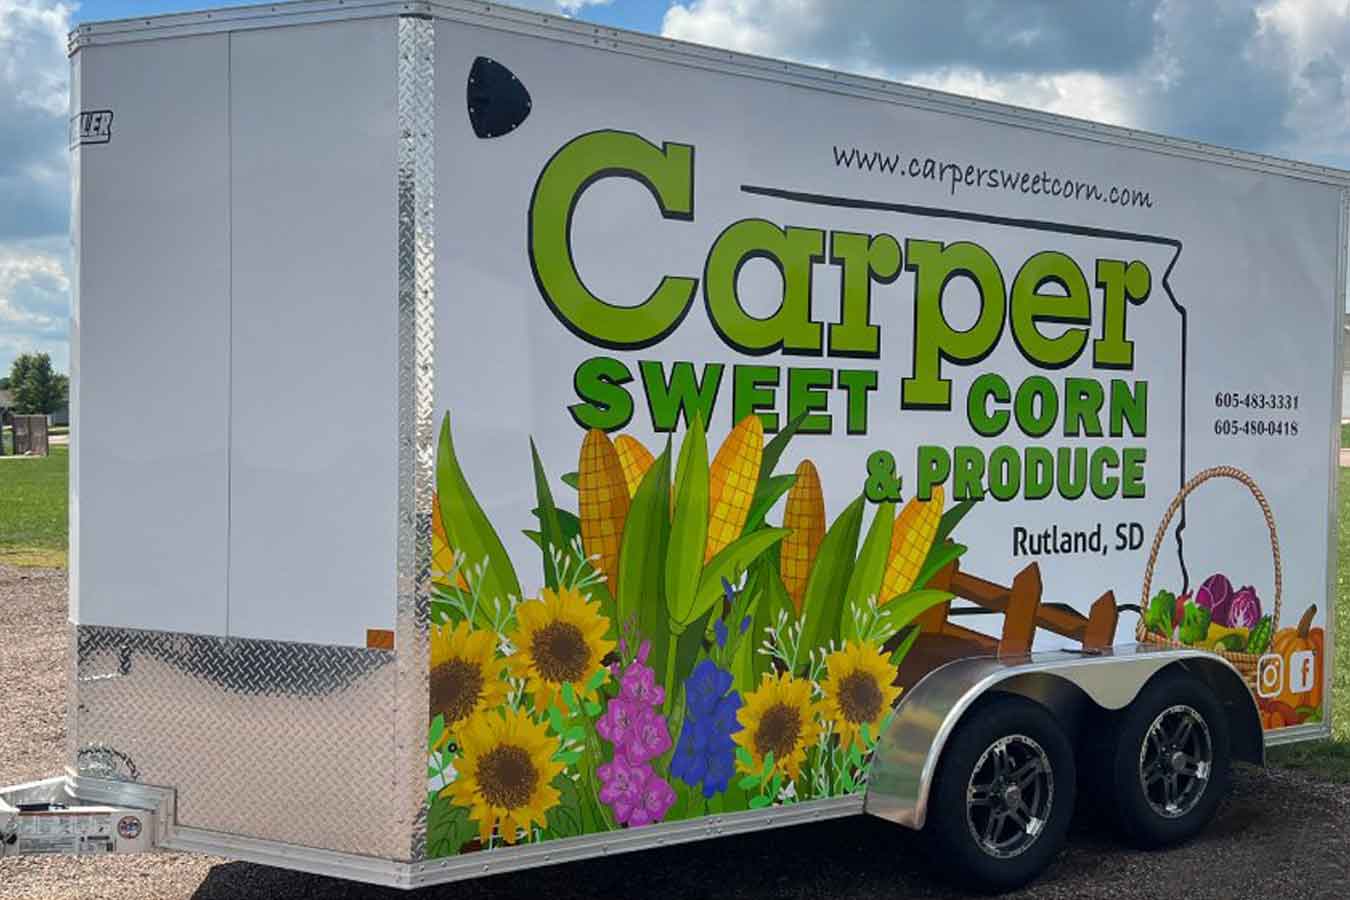 Carper Sweetcorn and Produce truck